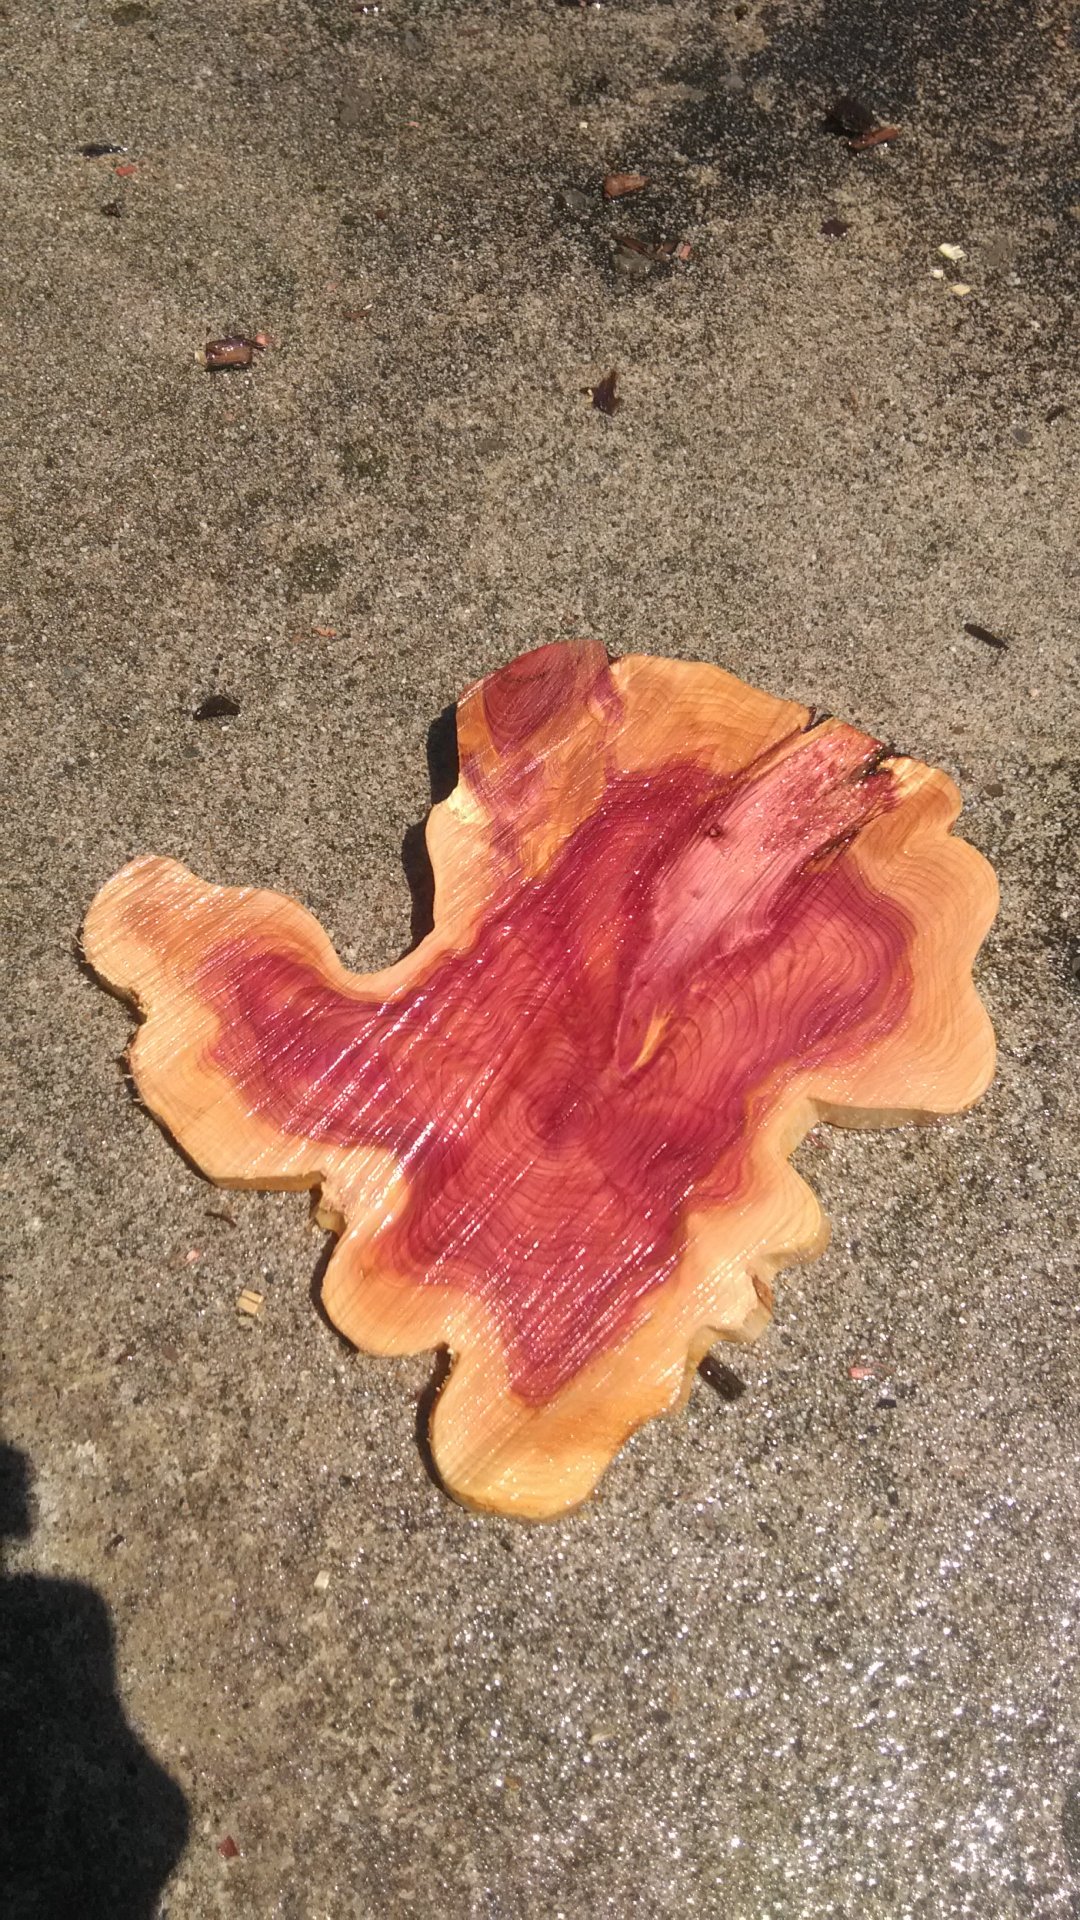 Roughly worked cedar cutting board or decorative piece.